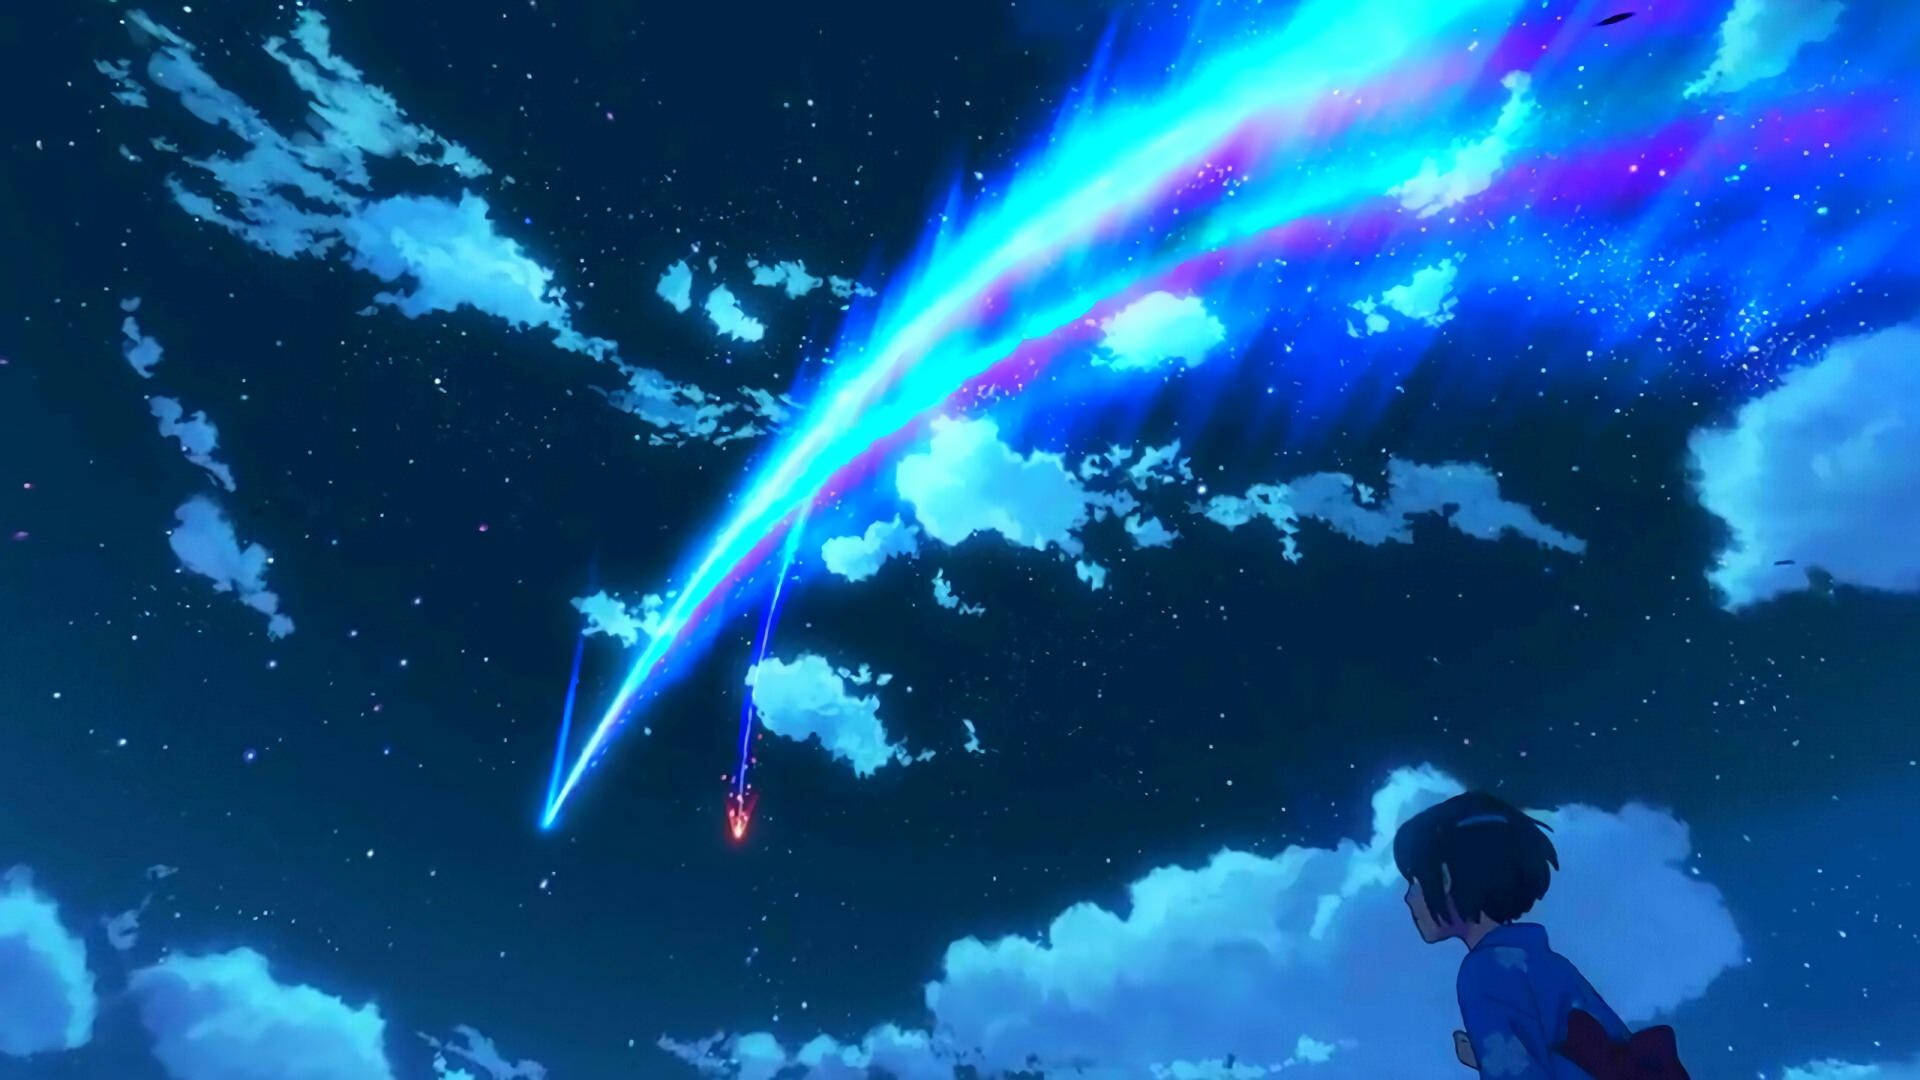 Comet Tiamat Anime Night Sky Wallpaper